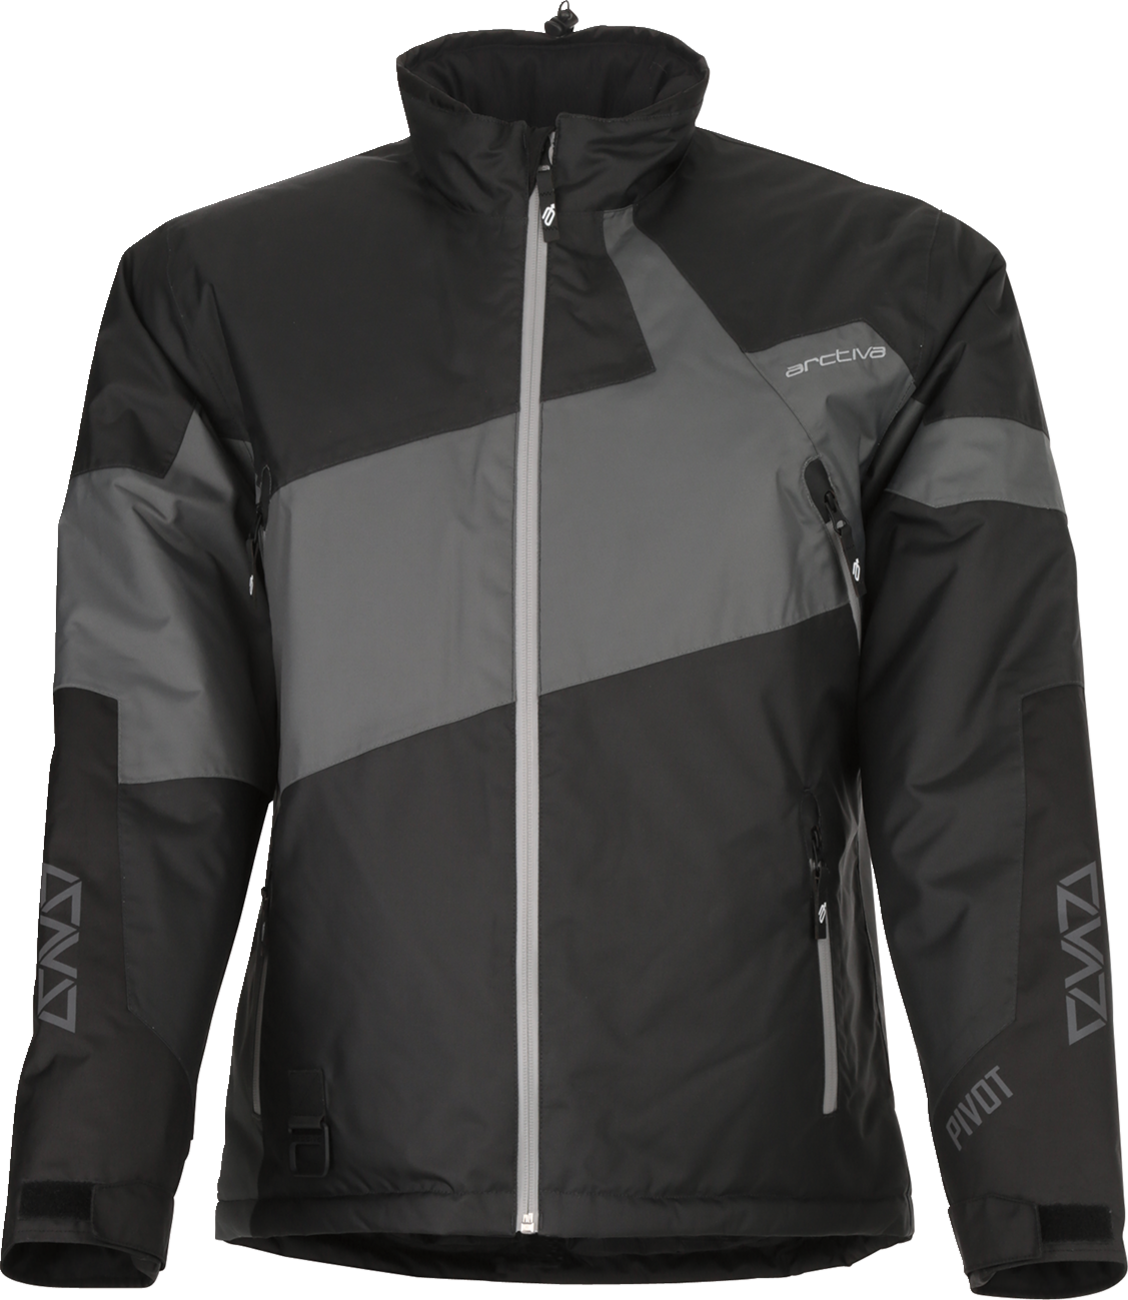 ARCTIVA Pivot 6 Jacket - Gray/Black - Large 3120-2088